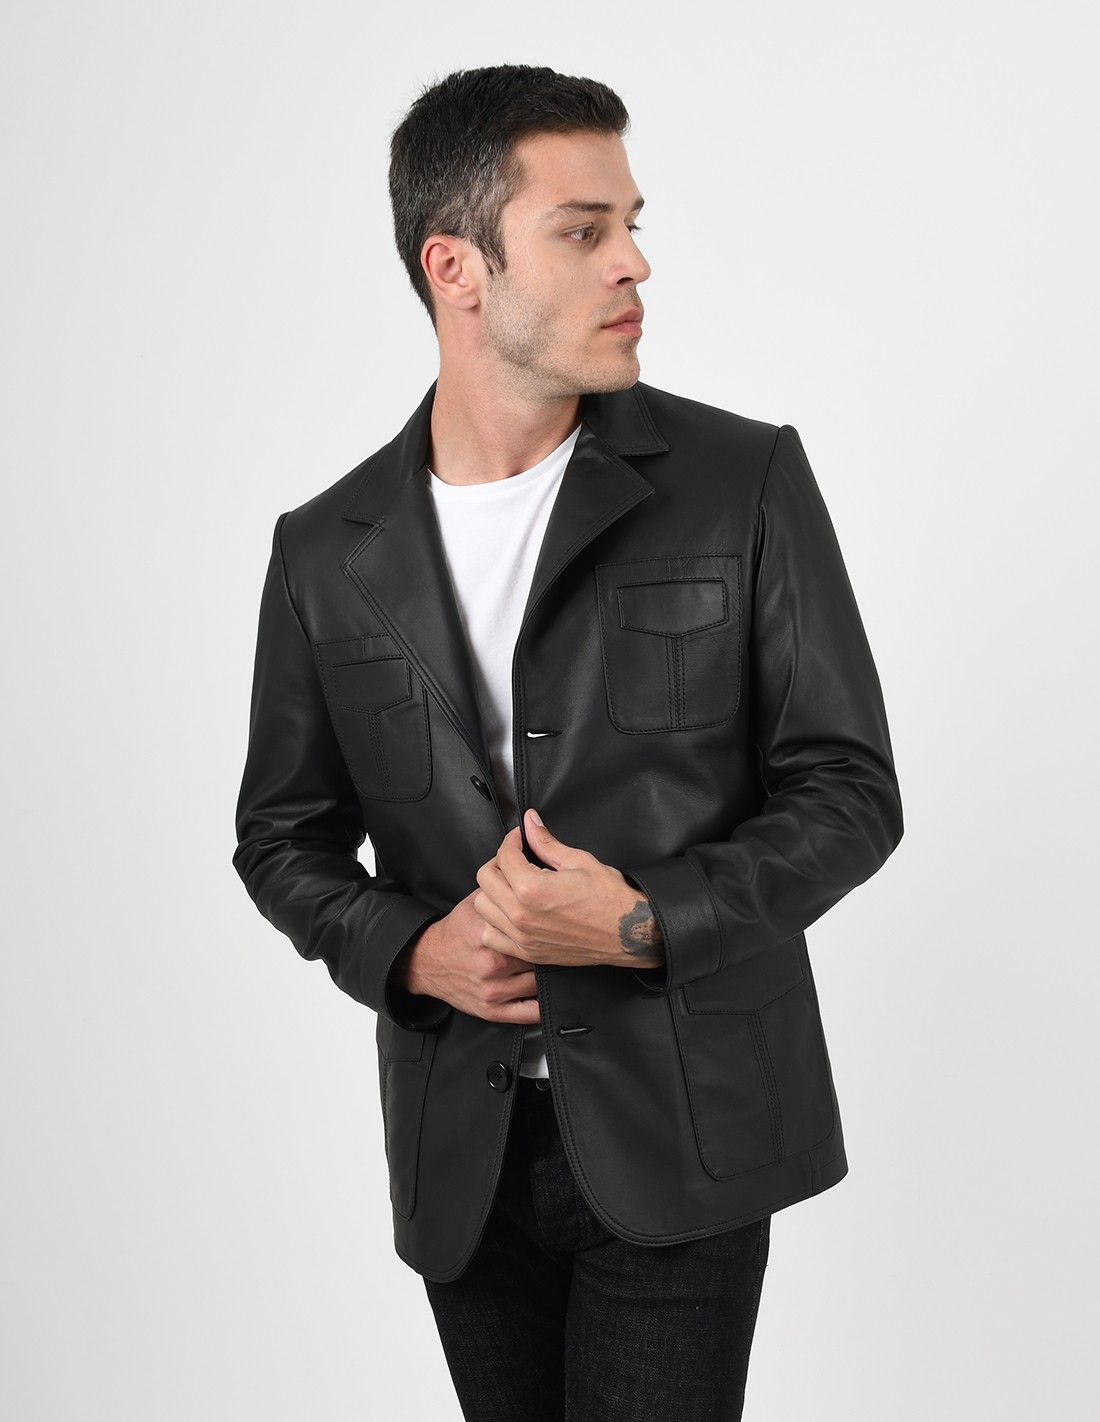 Blazer Leather Jacket for Man Black Martin